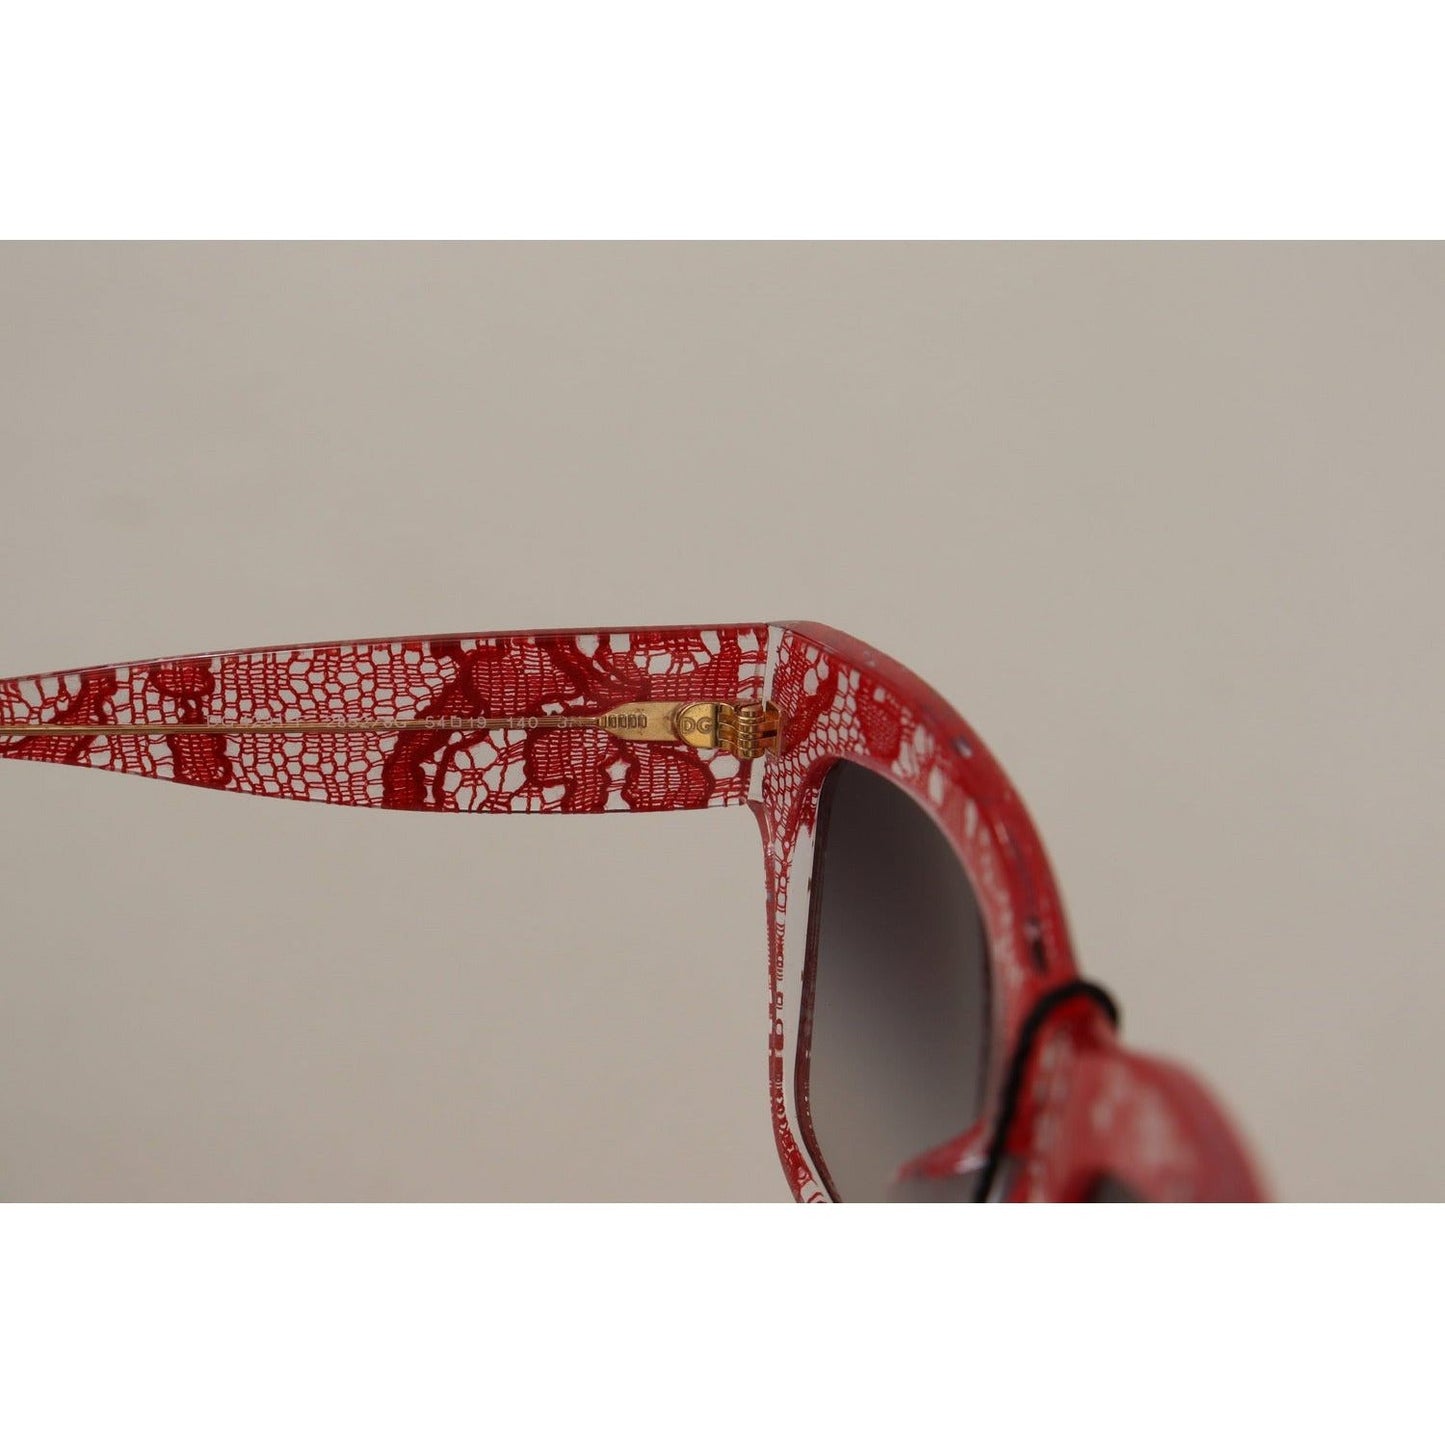 Dolce & Gabbana Elegant Sicilian Lace Insert Sunglasses WOMAN SUNGLASSES red-lace-acetate-rectangle-shades-sunglasses